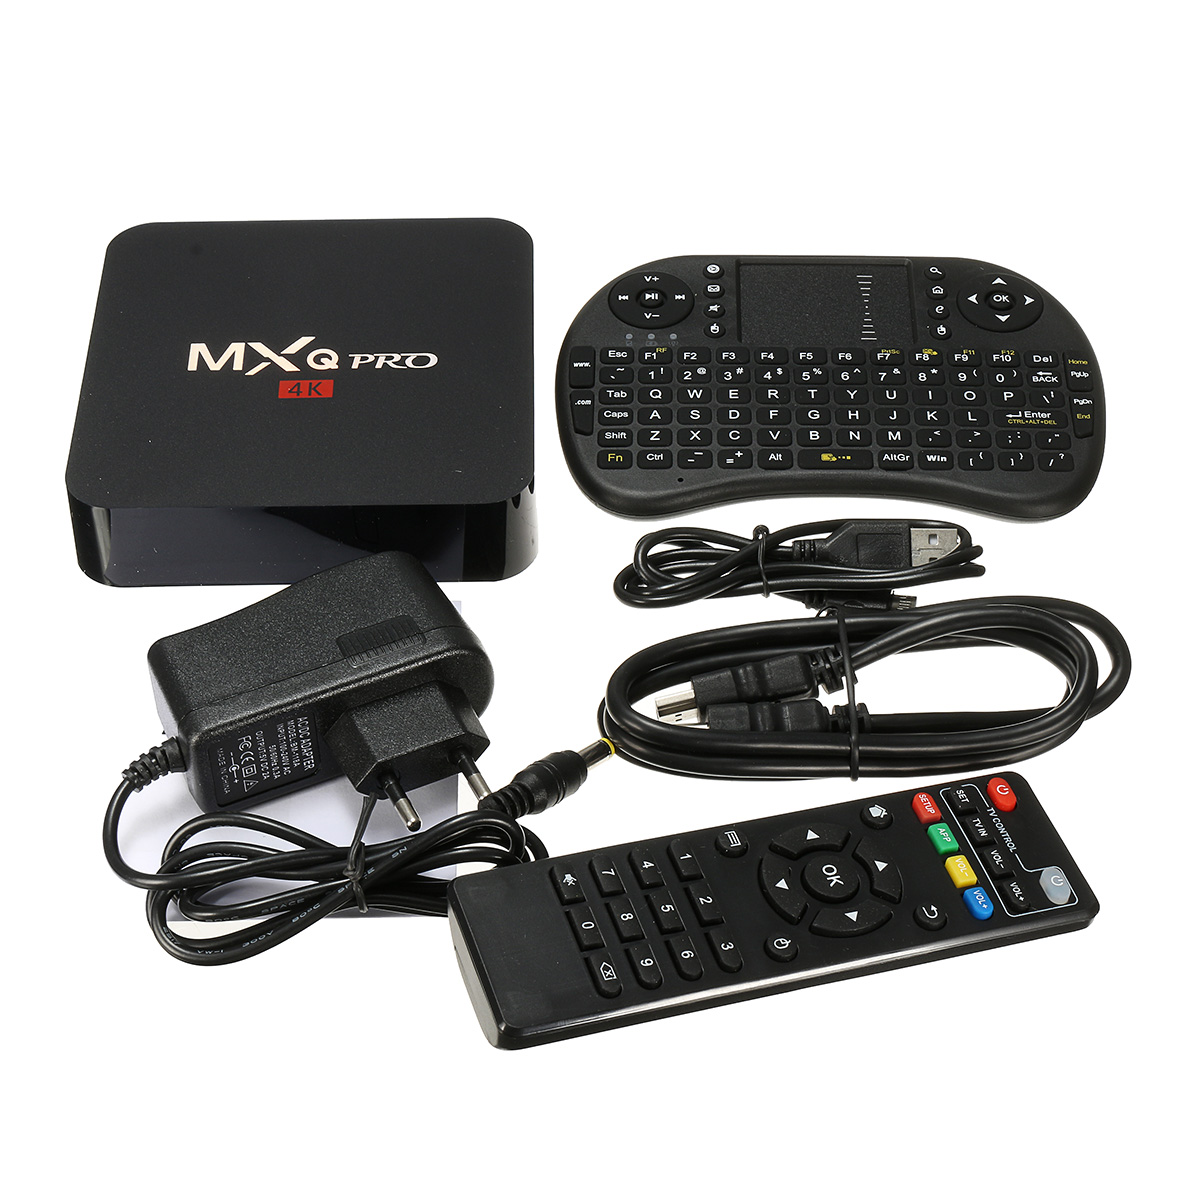 MXQ PRO Amlogic S905 1G/8G TV Box with Airmouse